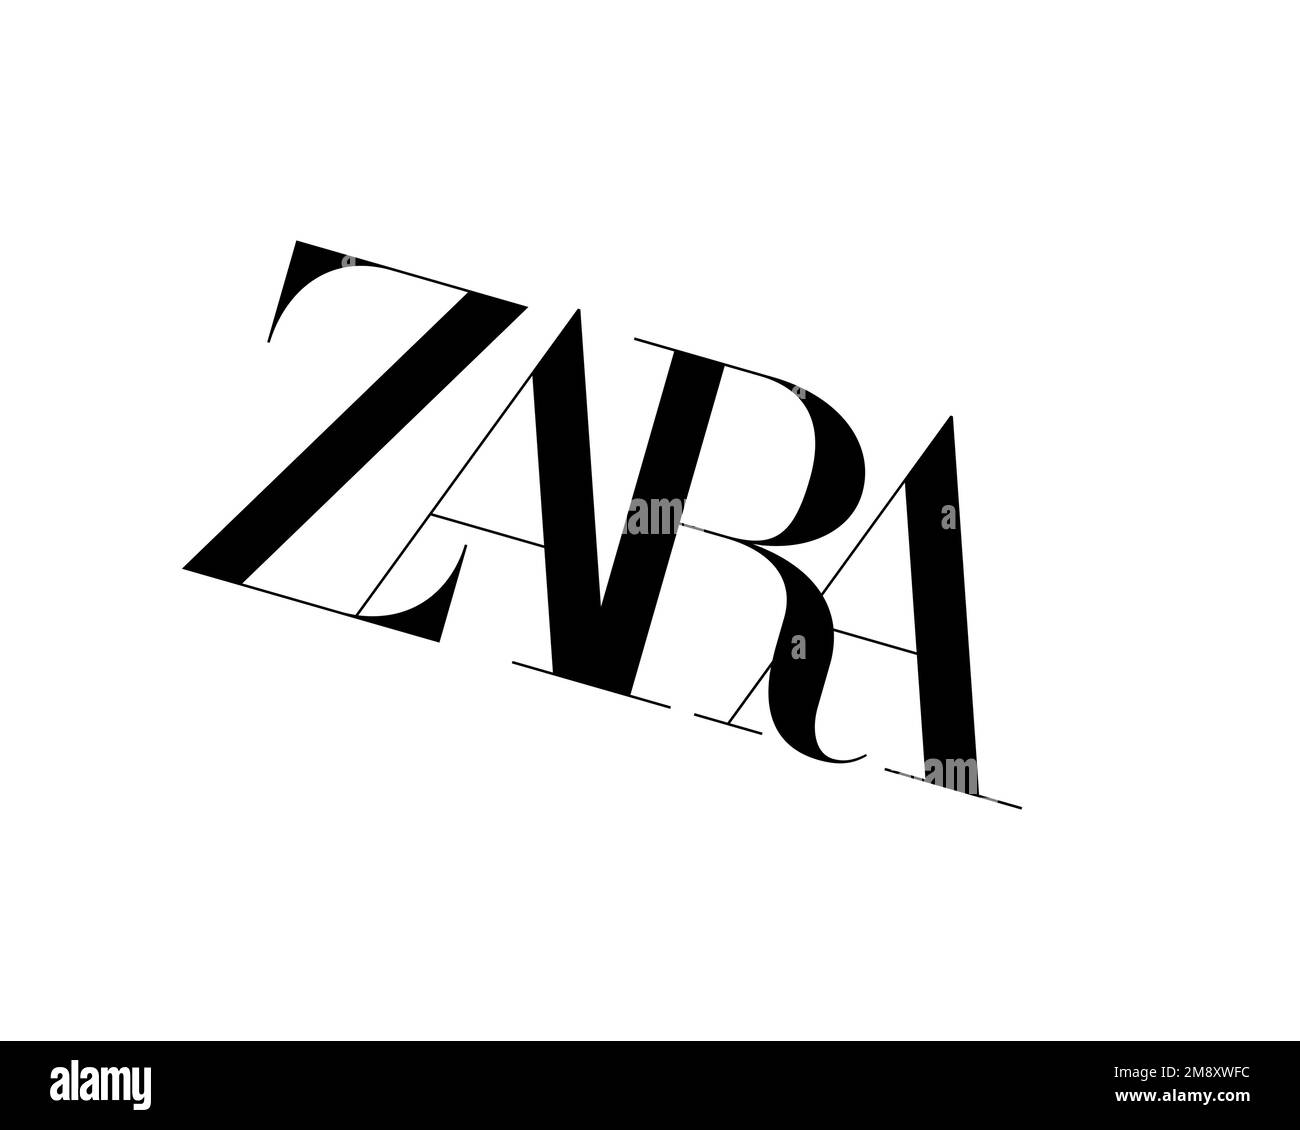 Zara Retail, er Zara Retail, er, logo pivoté, fond blanc B Banque D'Images